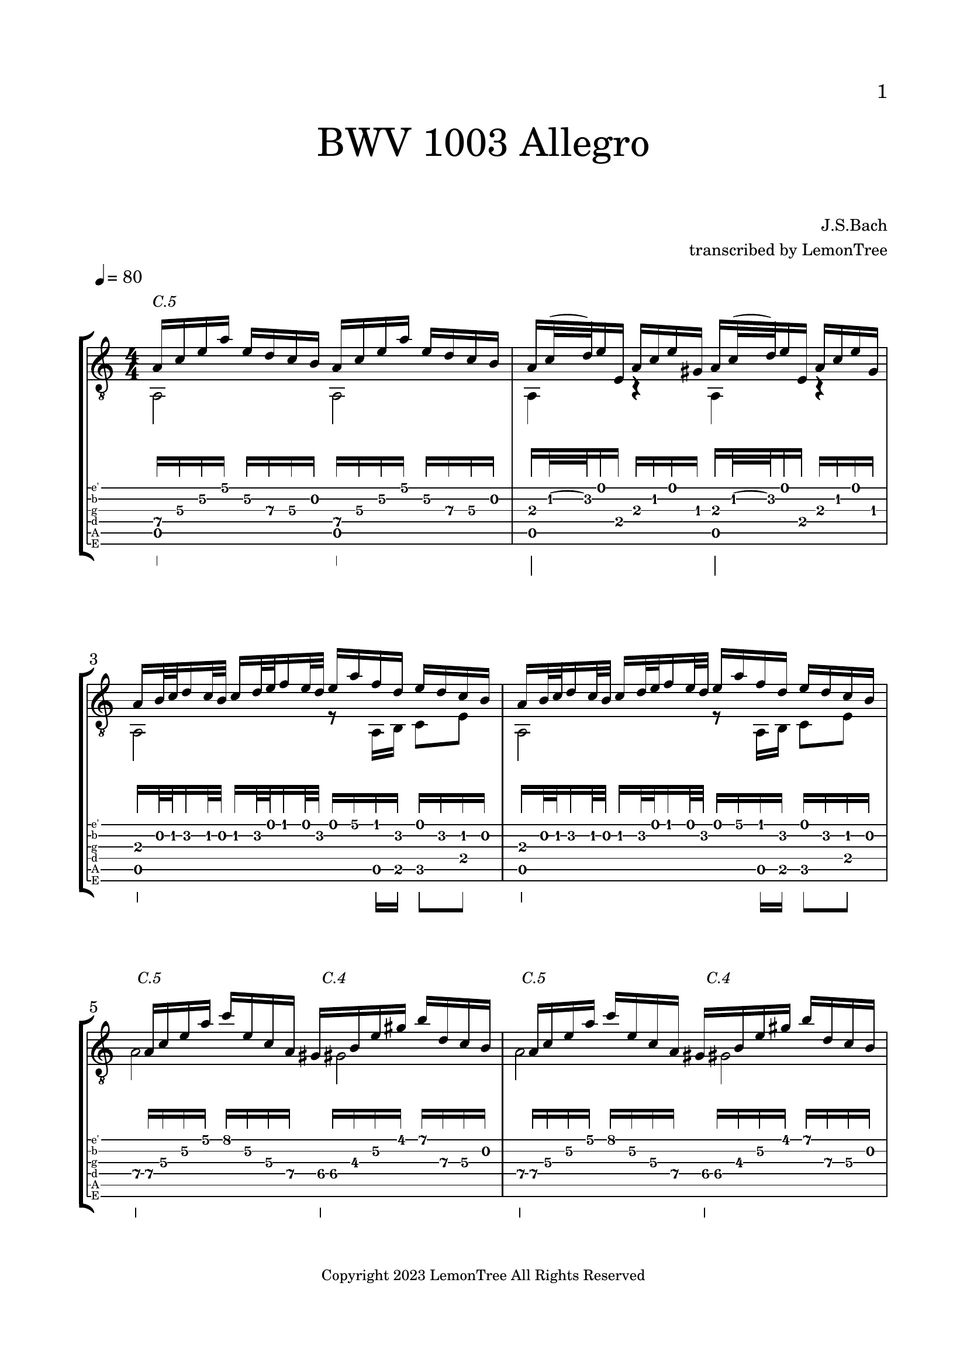 J.S.Bach - BWV 1003 Allegro by LemonTree